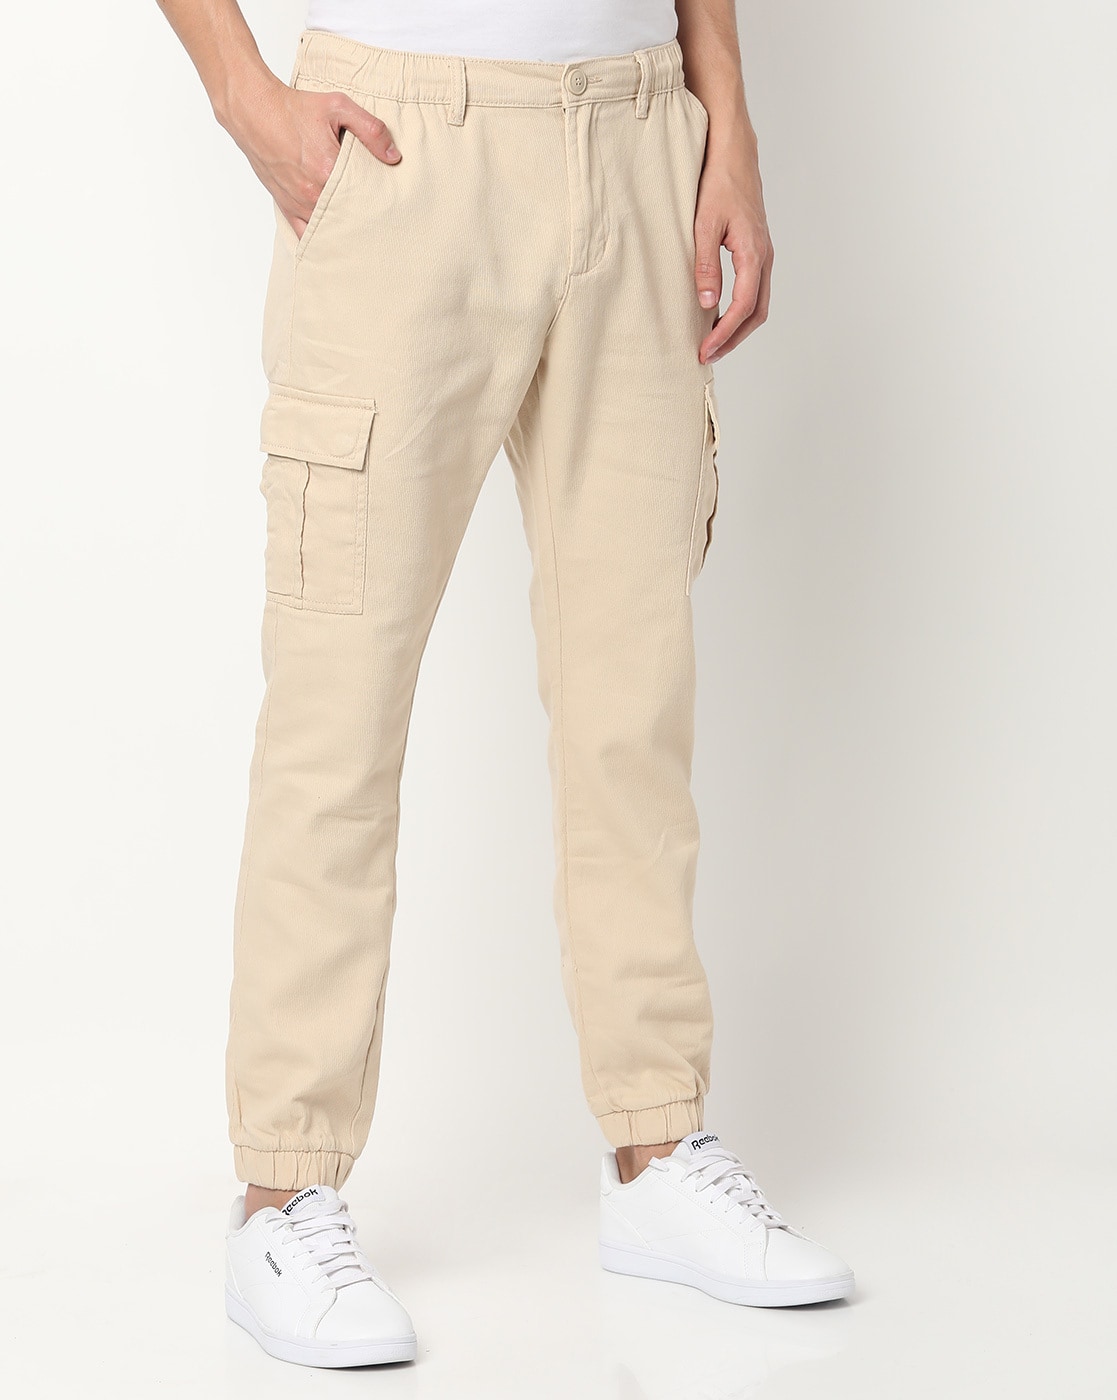 Buy Grey Trousers & Pants for Men by EVERDION Online | Ajio.com